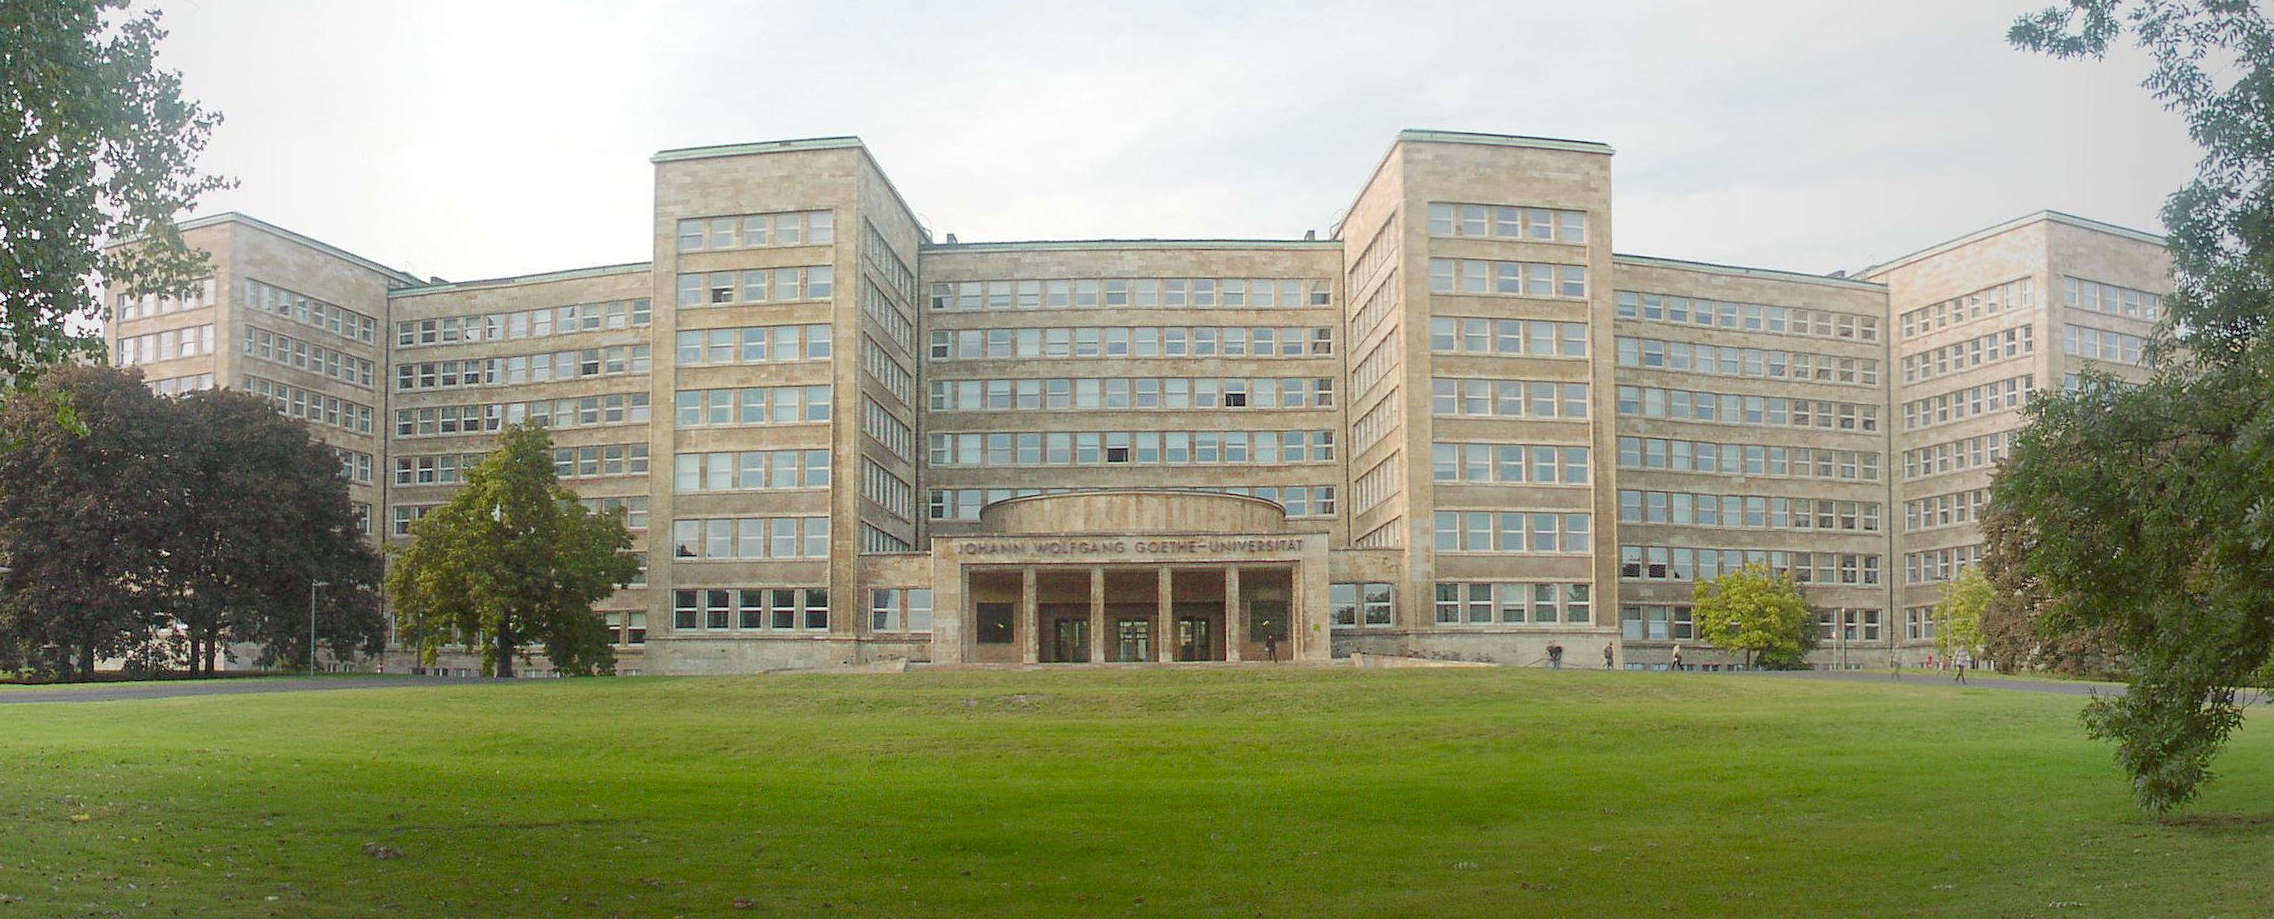 Goethe_University_Frankfurt_Poelzig_Building